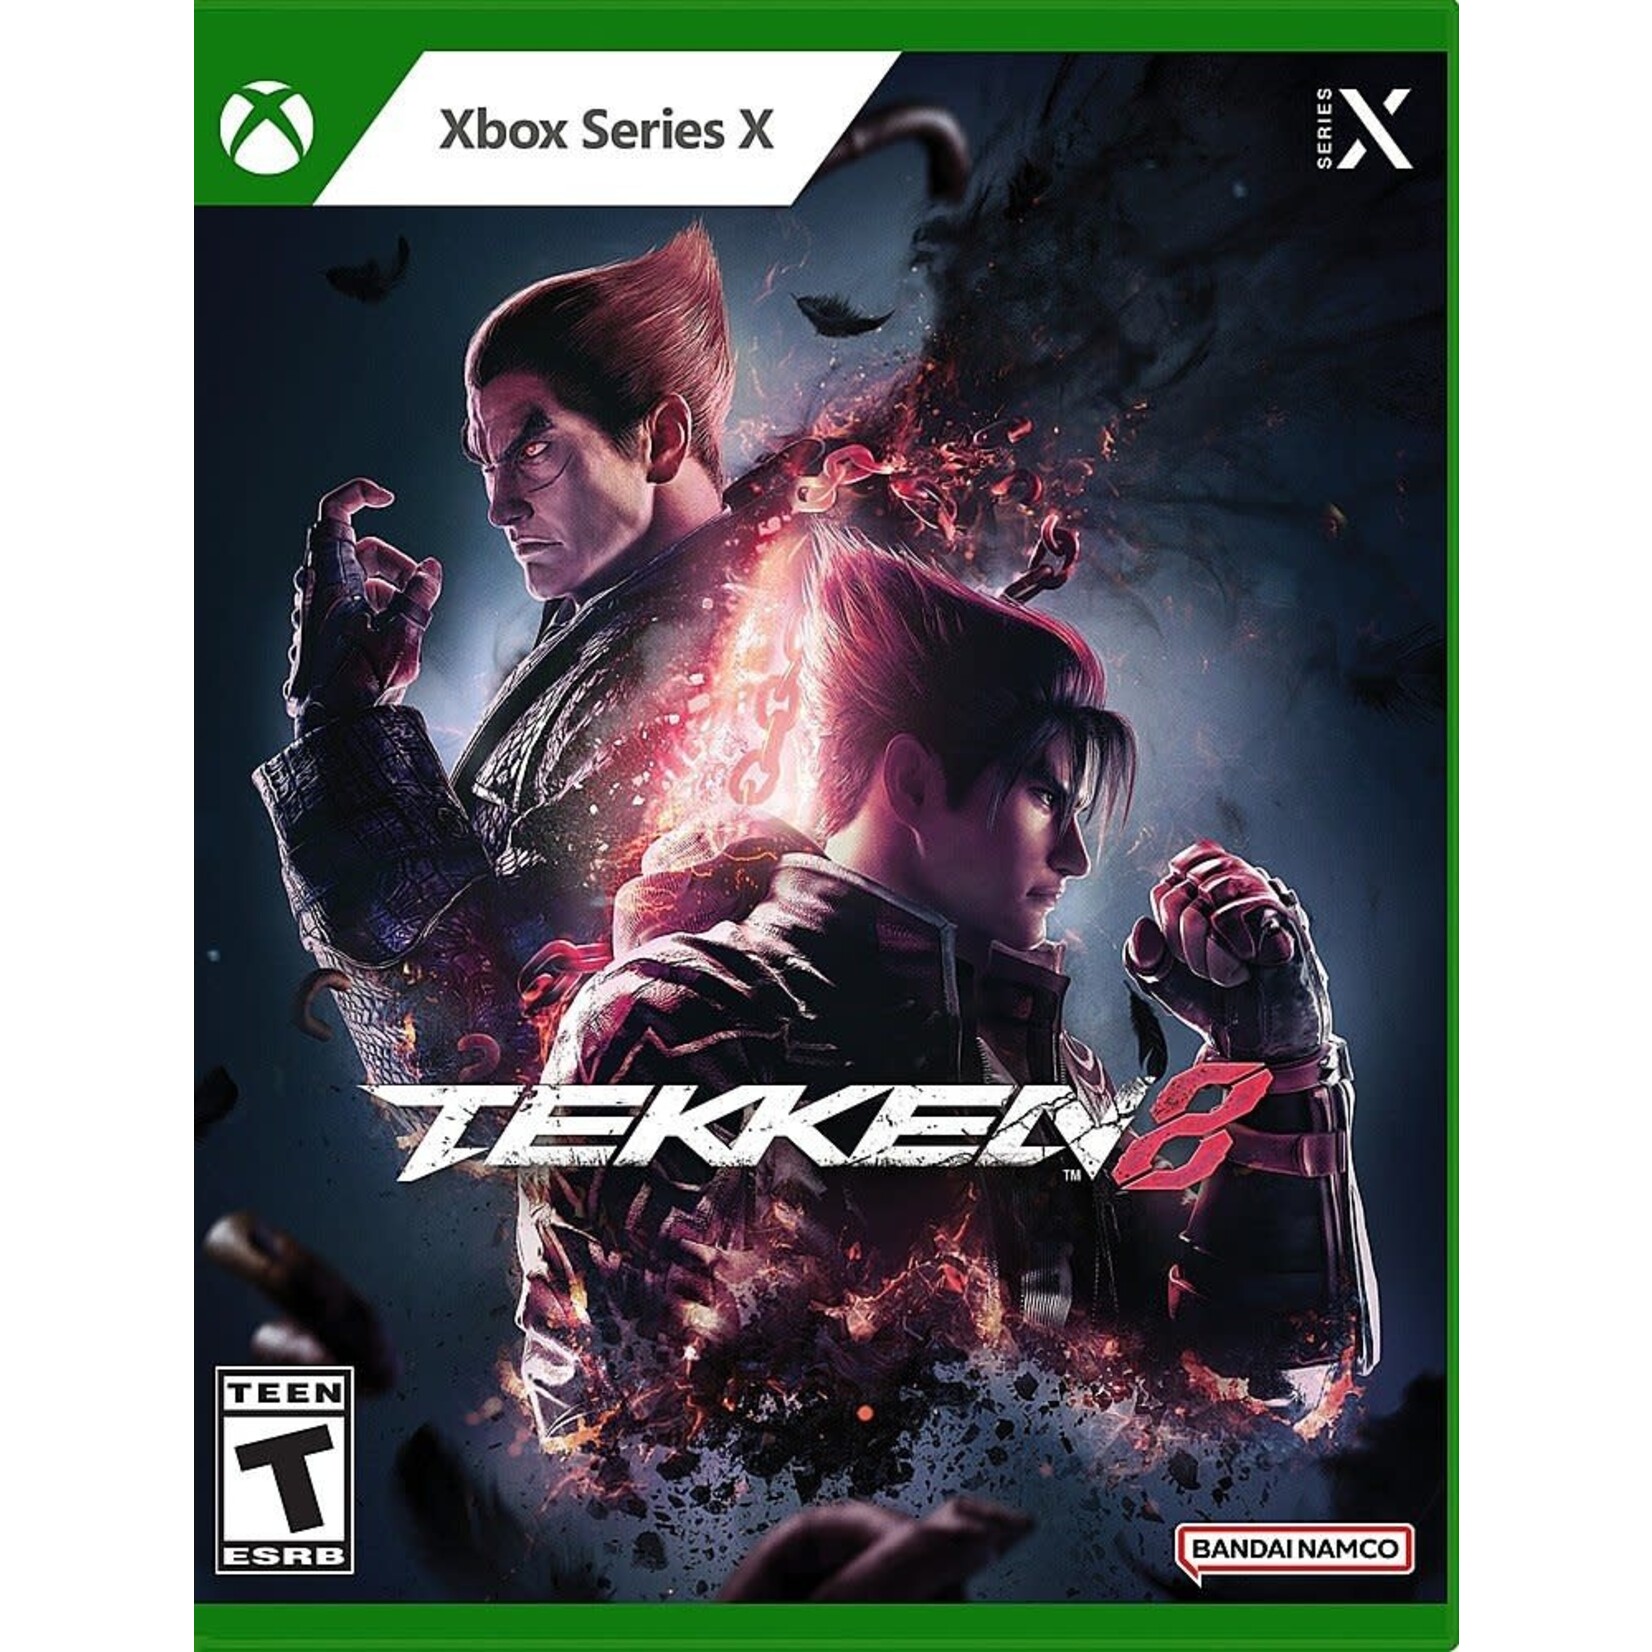 XBX-Tekken 8